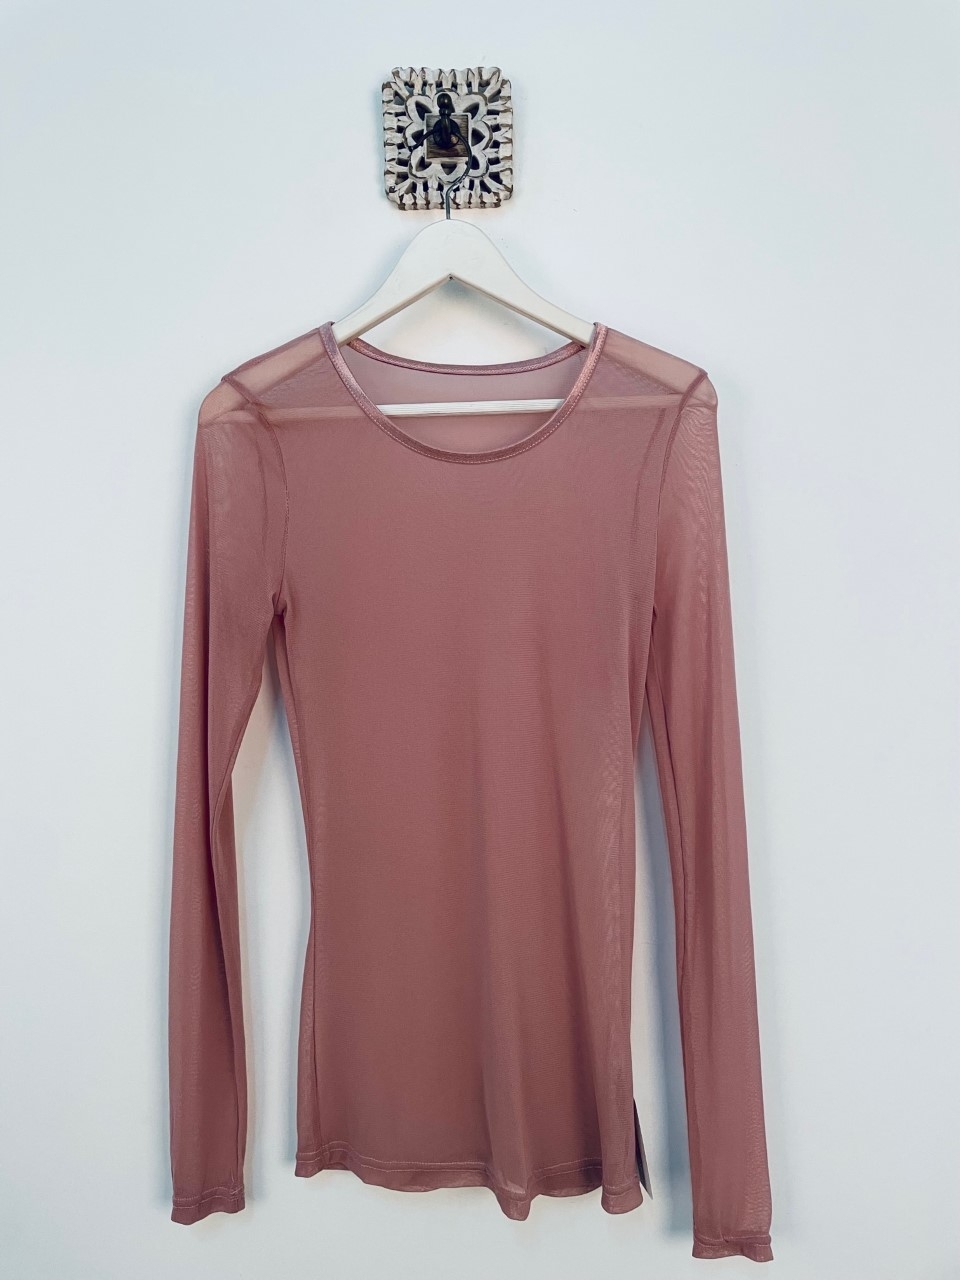 Camiseta tul transparente - - Belle Bohême - Tienda online La que inspira